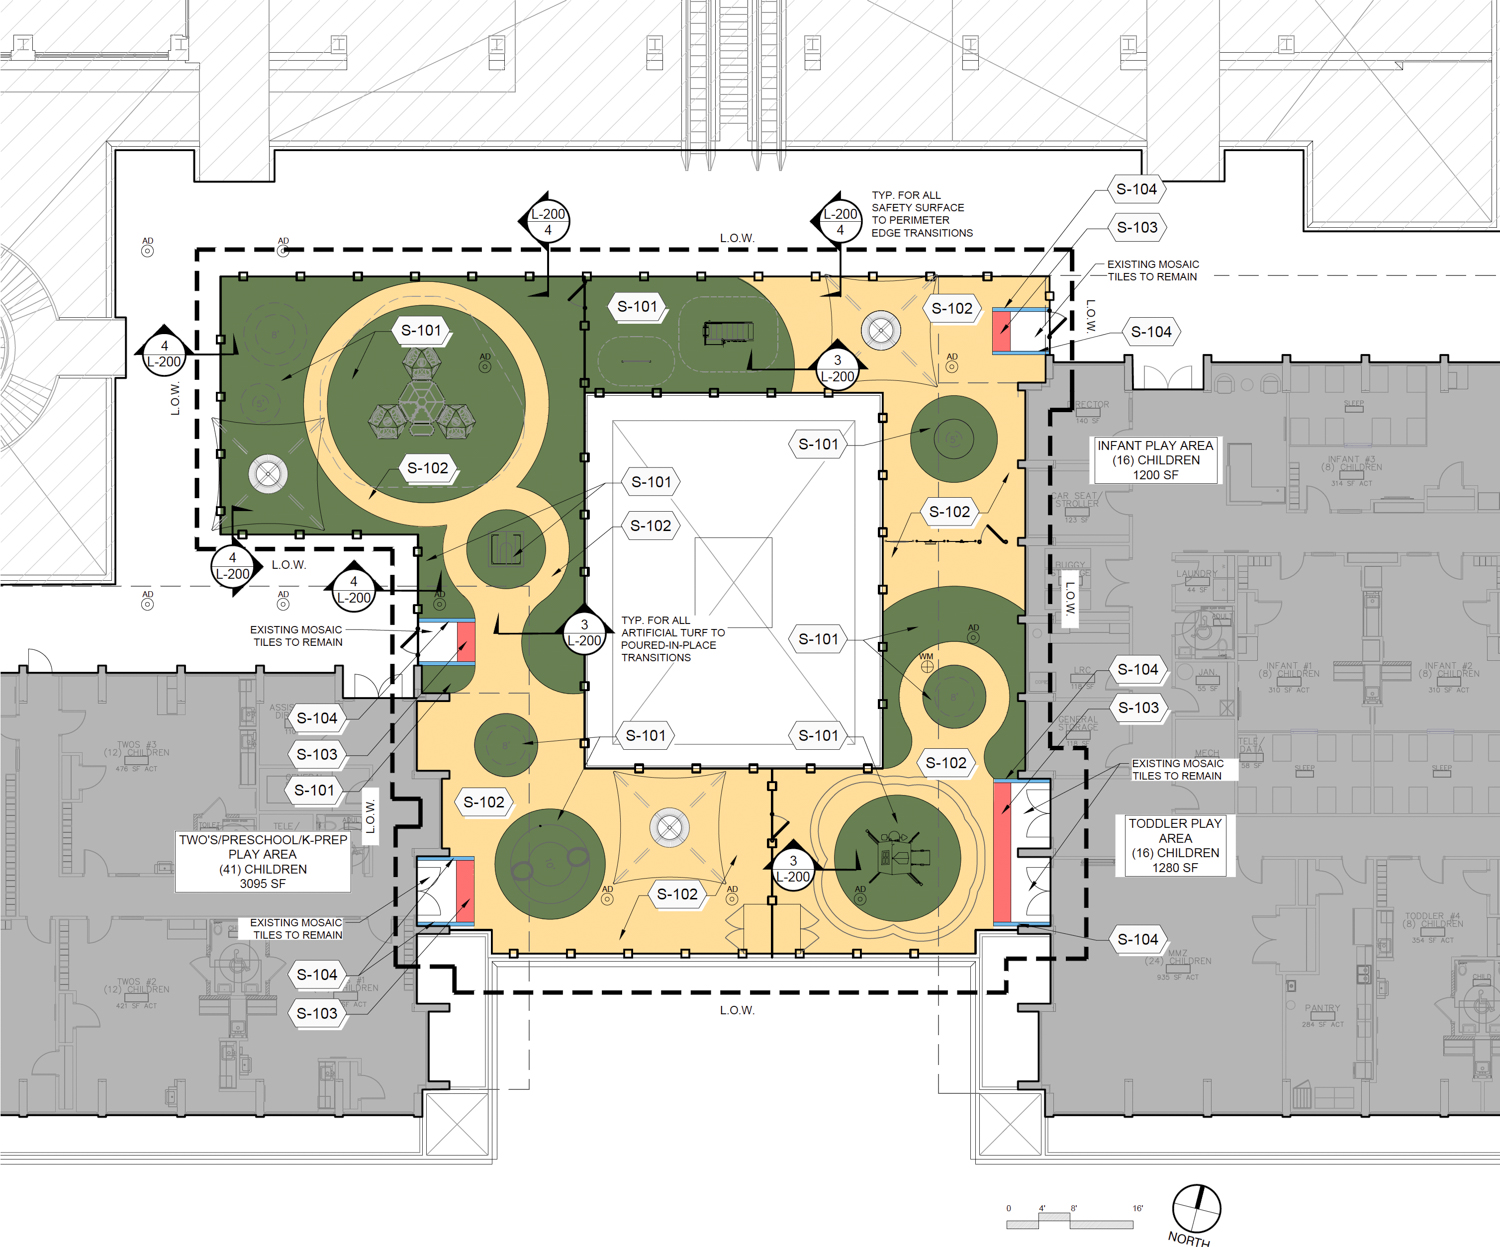 3 Embarcadero Center childcare facility site map, illustration by Studio MLA Architects